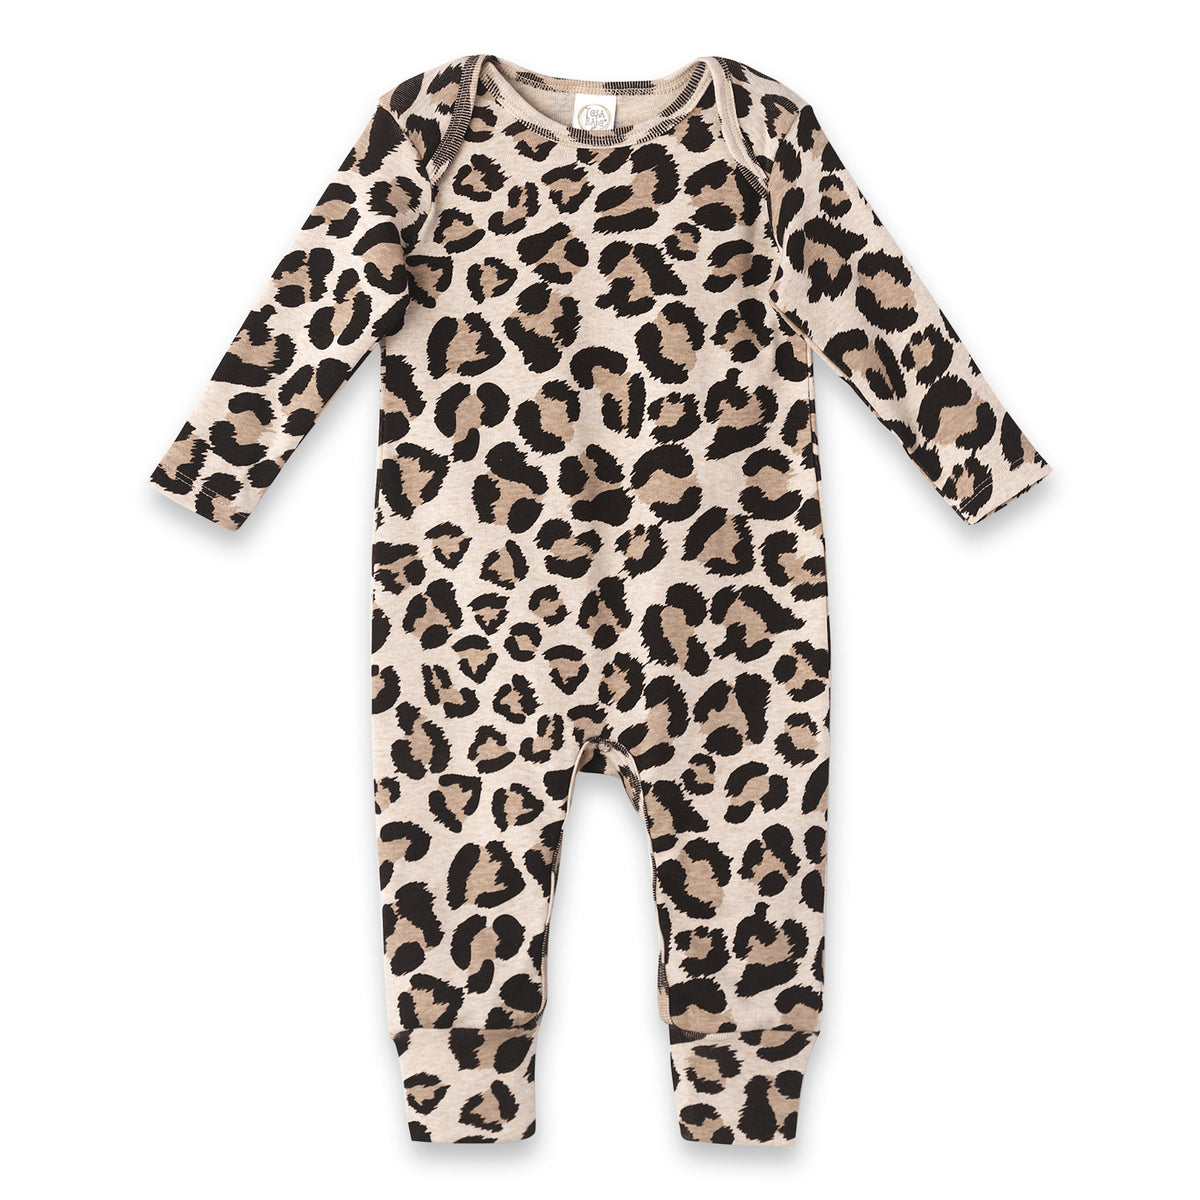 Tesa Babe Baby Girl Clothes Romper / NB Leopard Romper